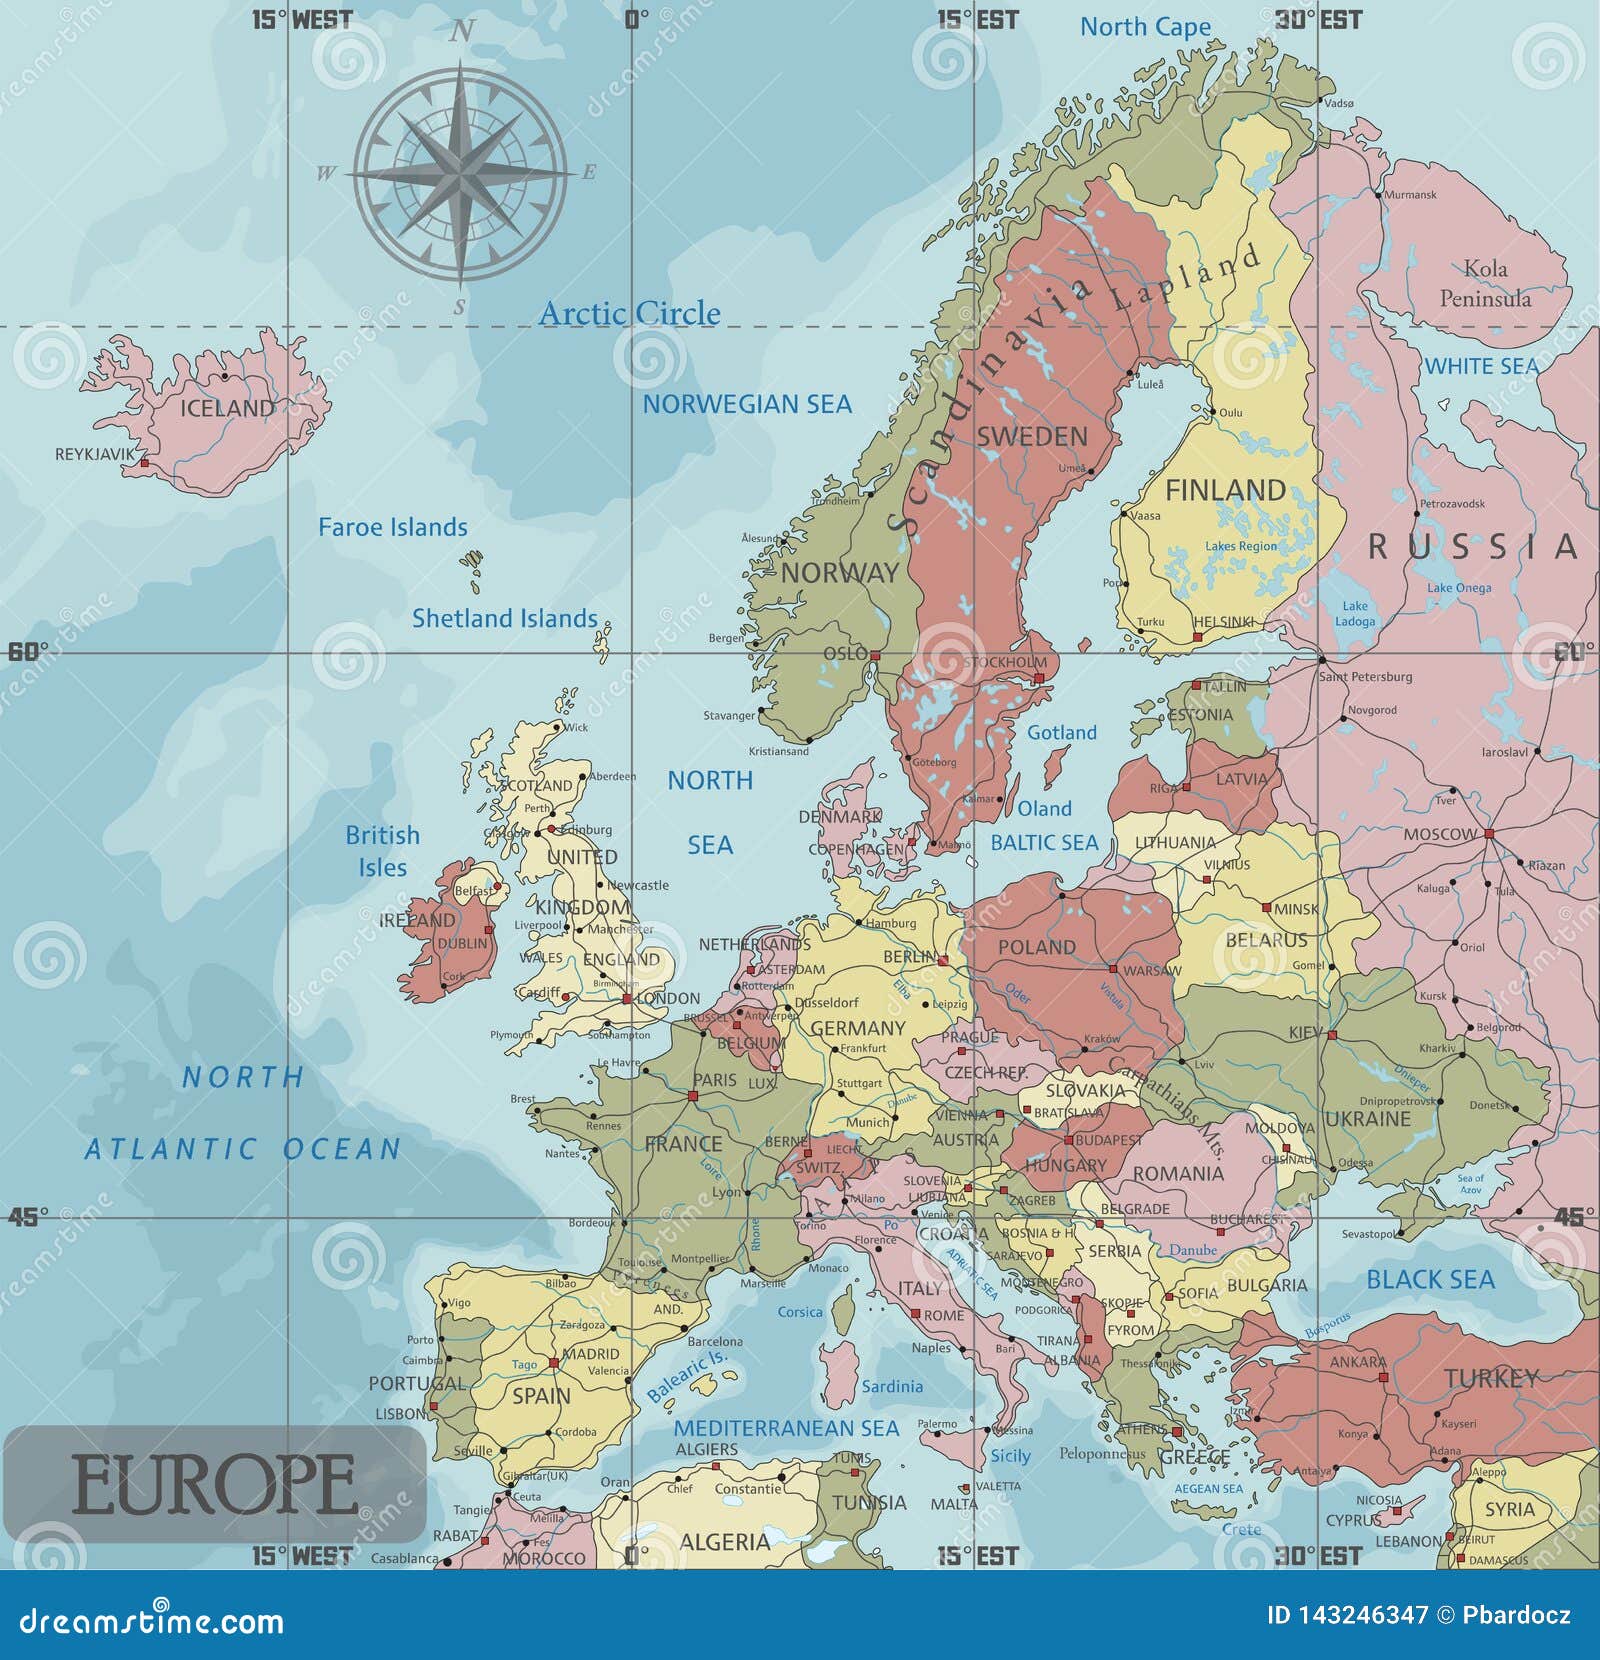 Cartographie : La Projection de Mercator